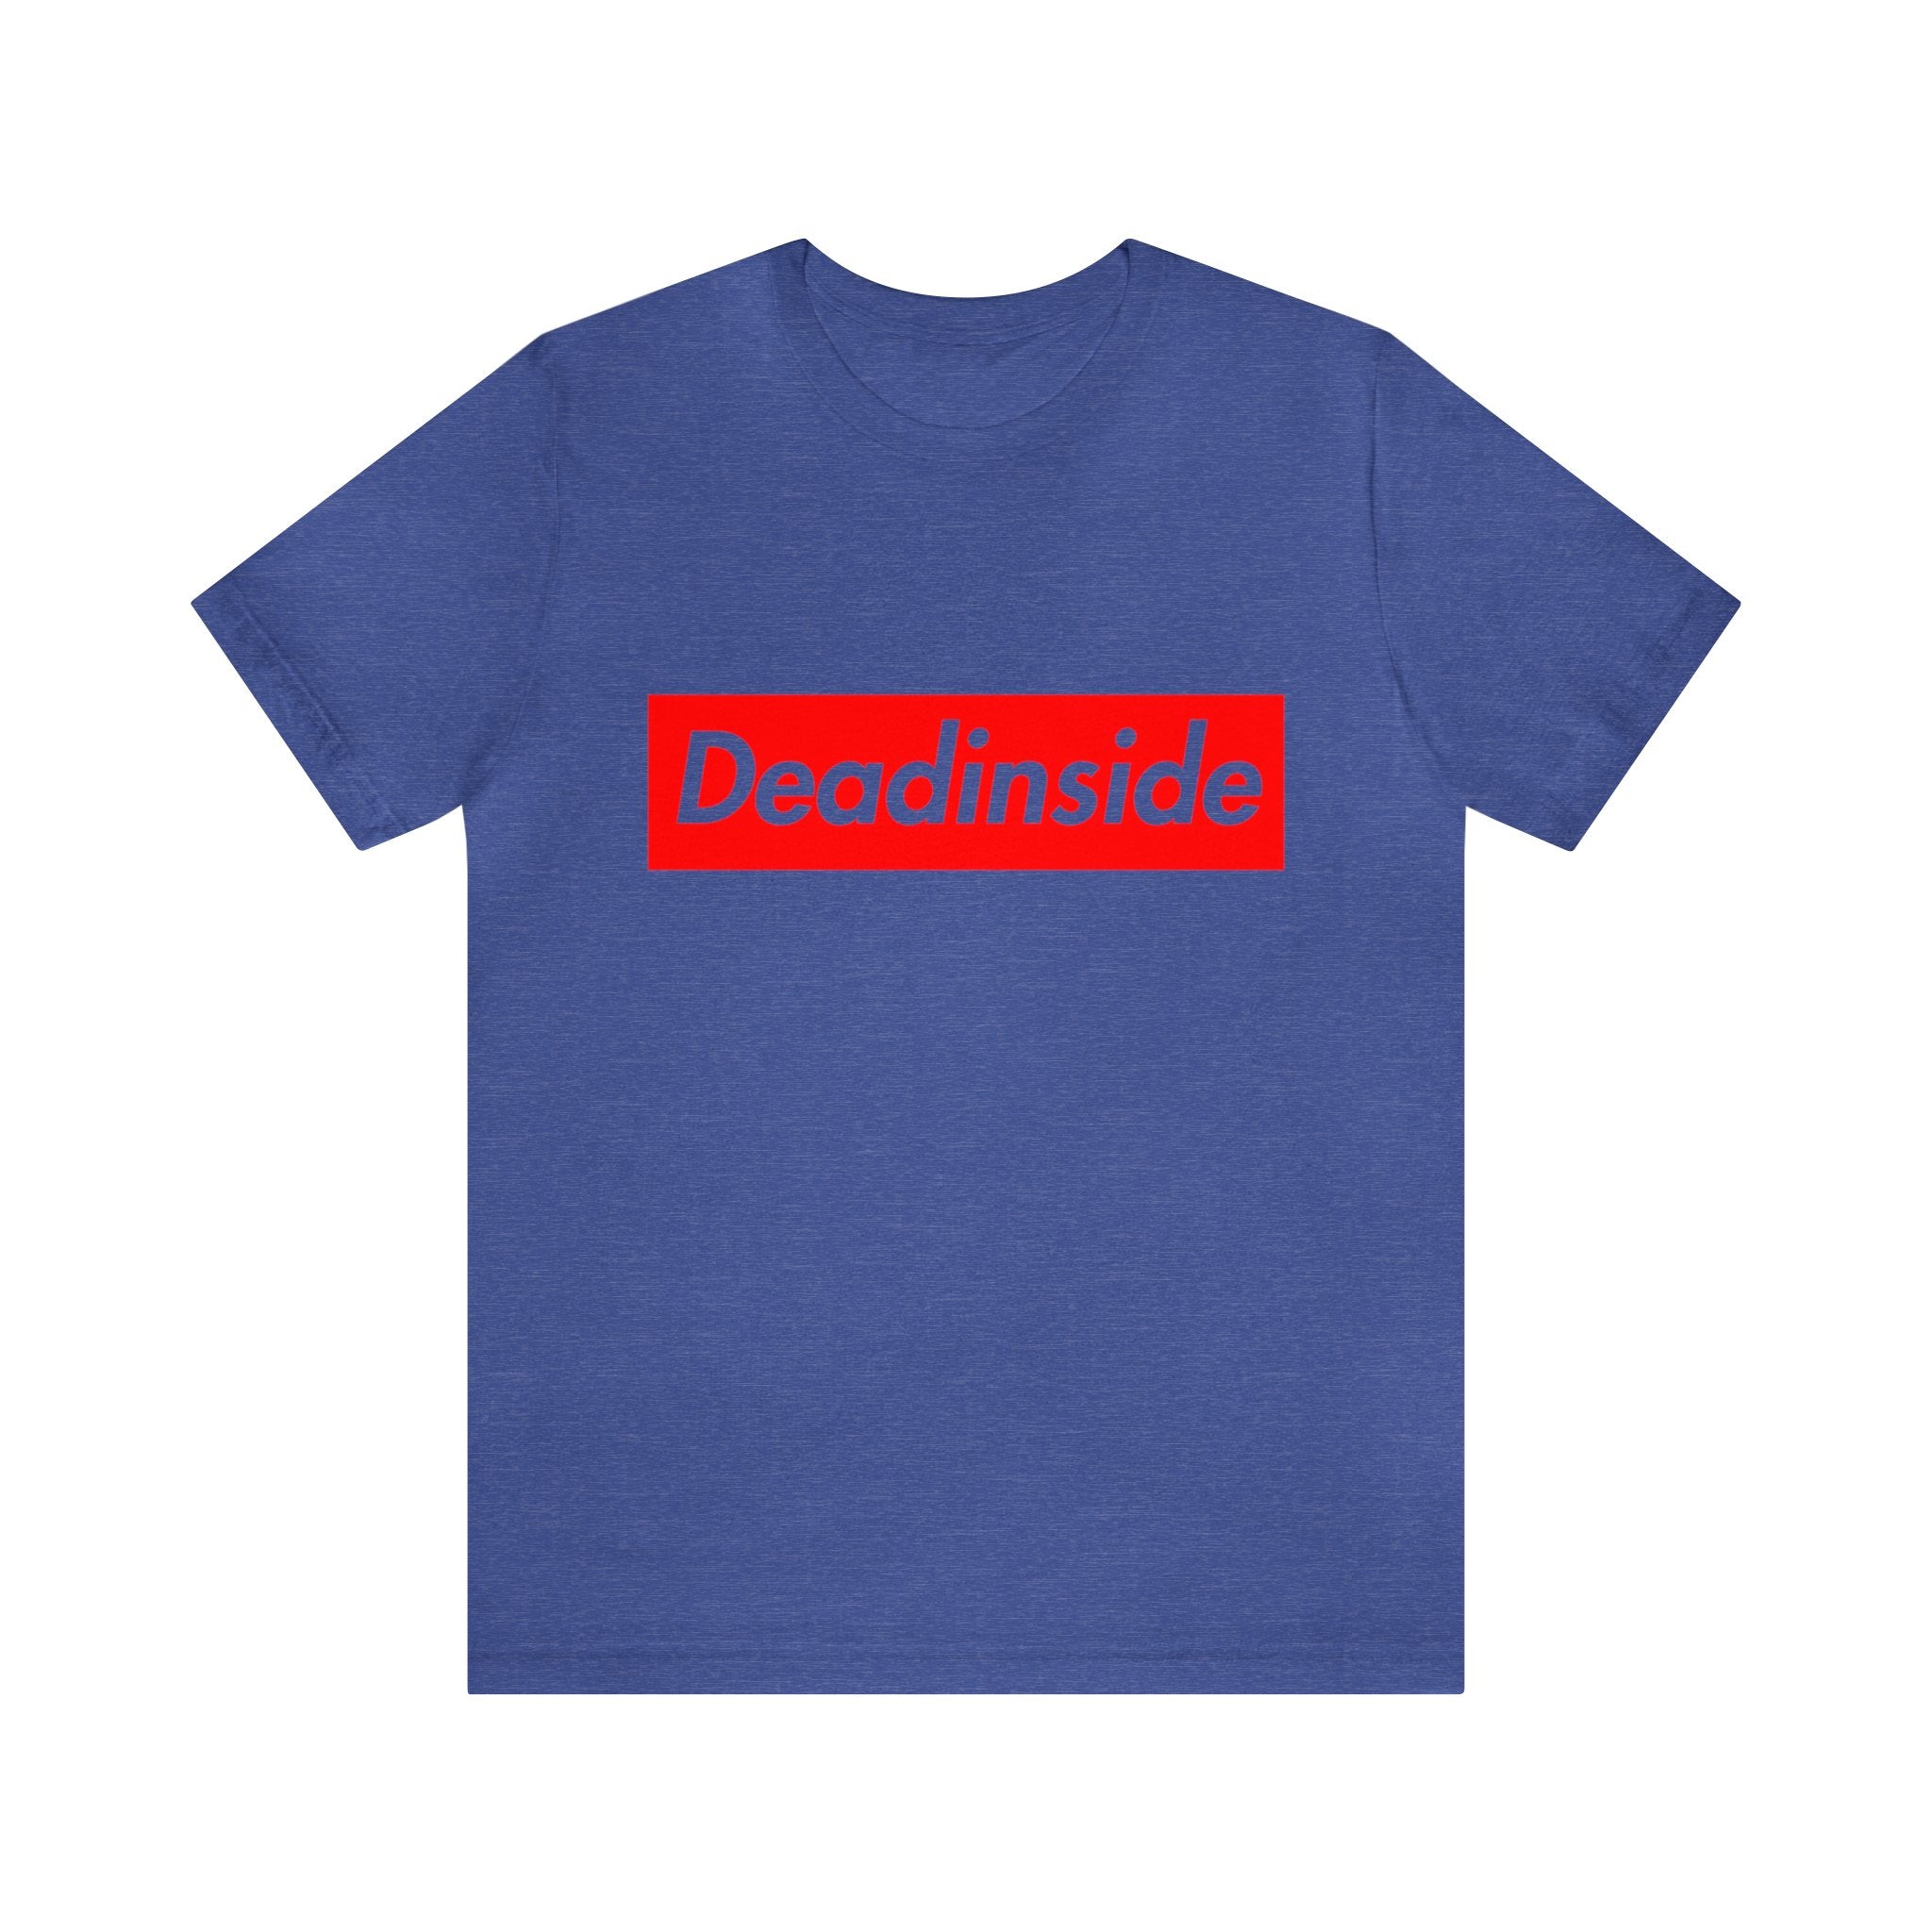 Supreme Deadinside T-Shirt